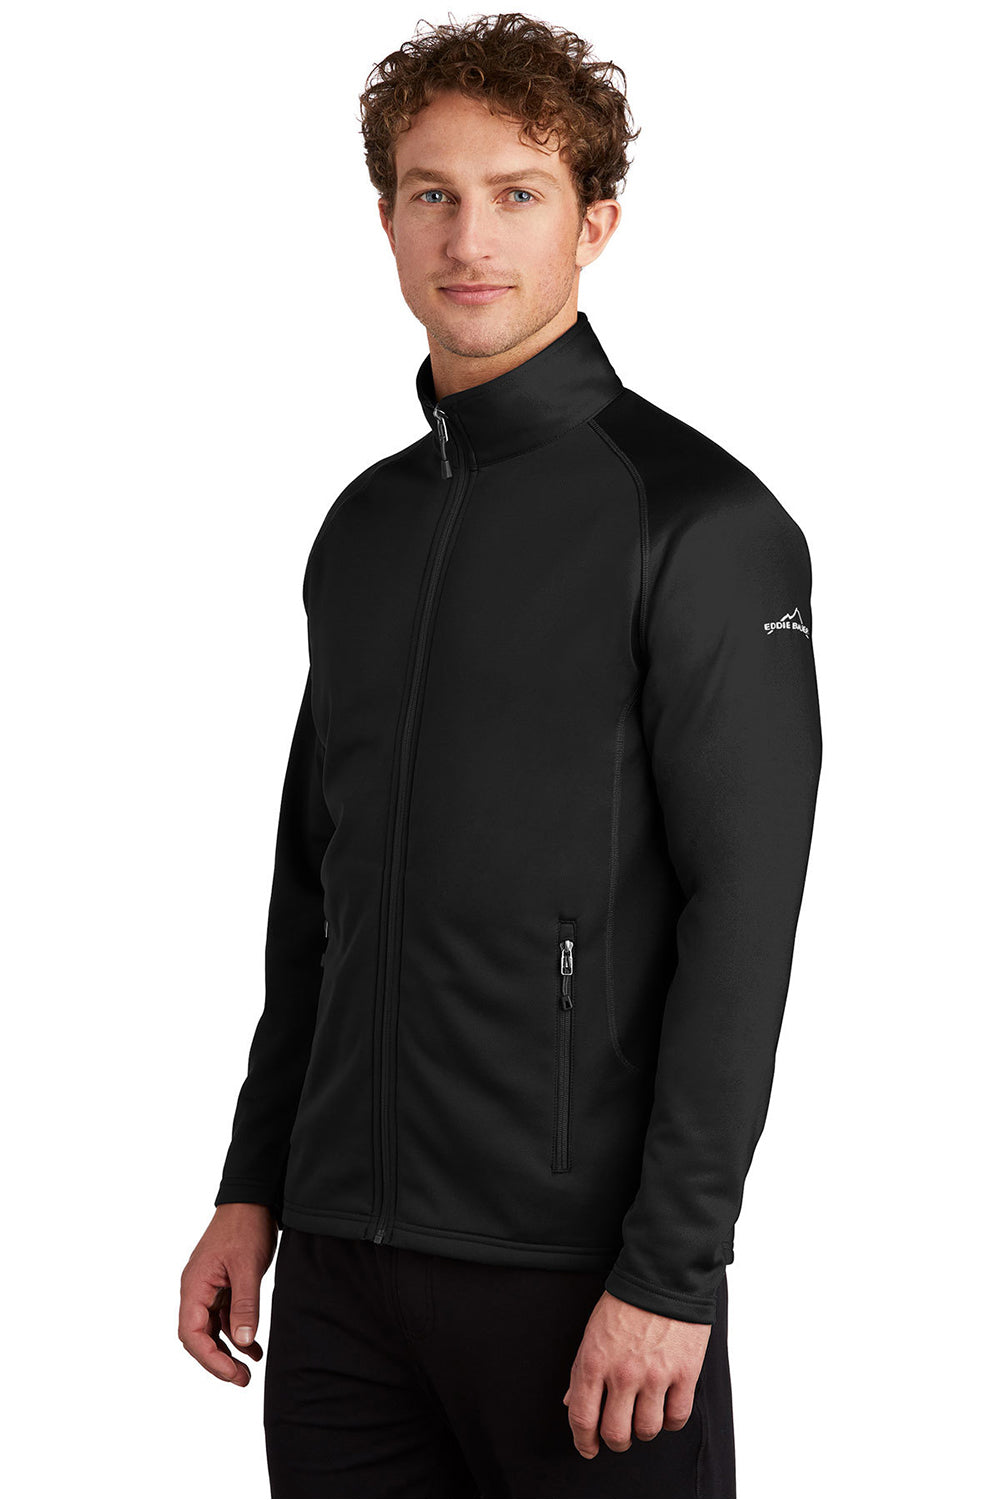 Eddie Bauer EB246 Mens Fleece Full Zip Jacket Black Model 3Q